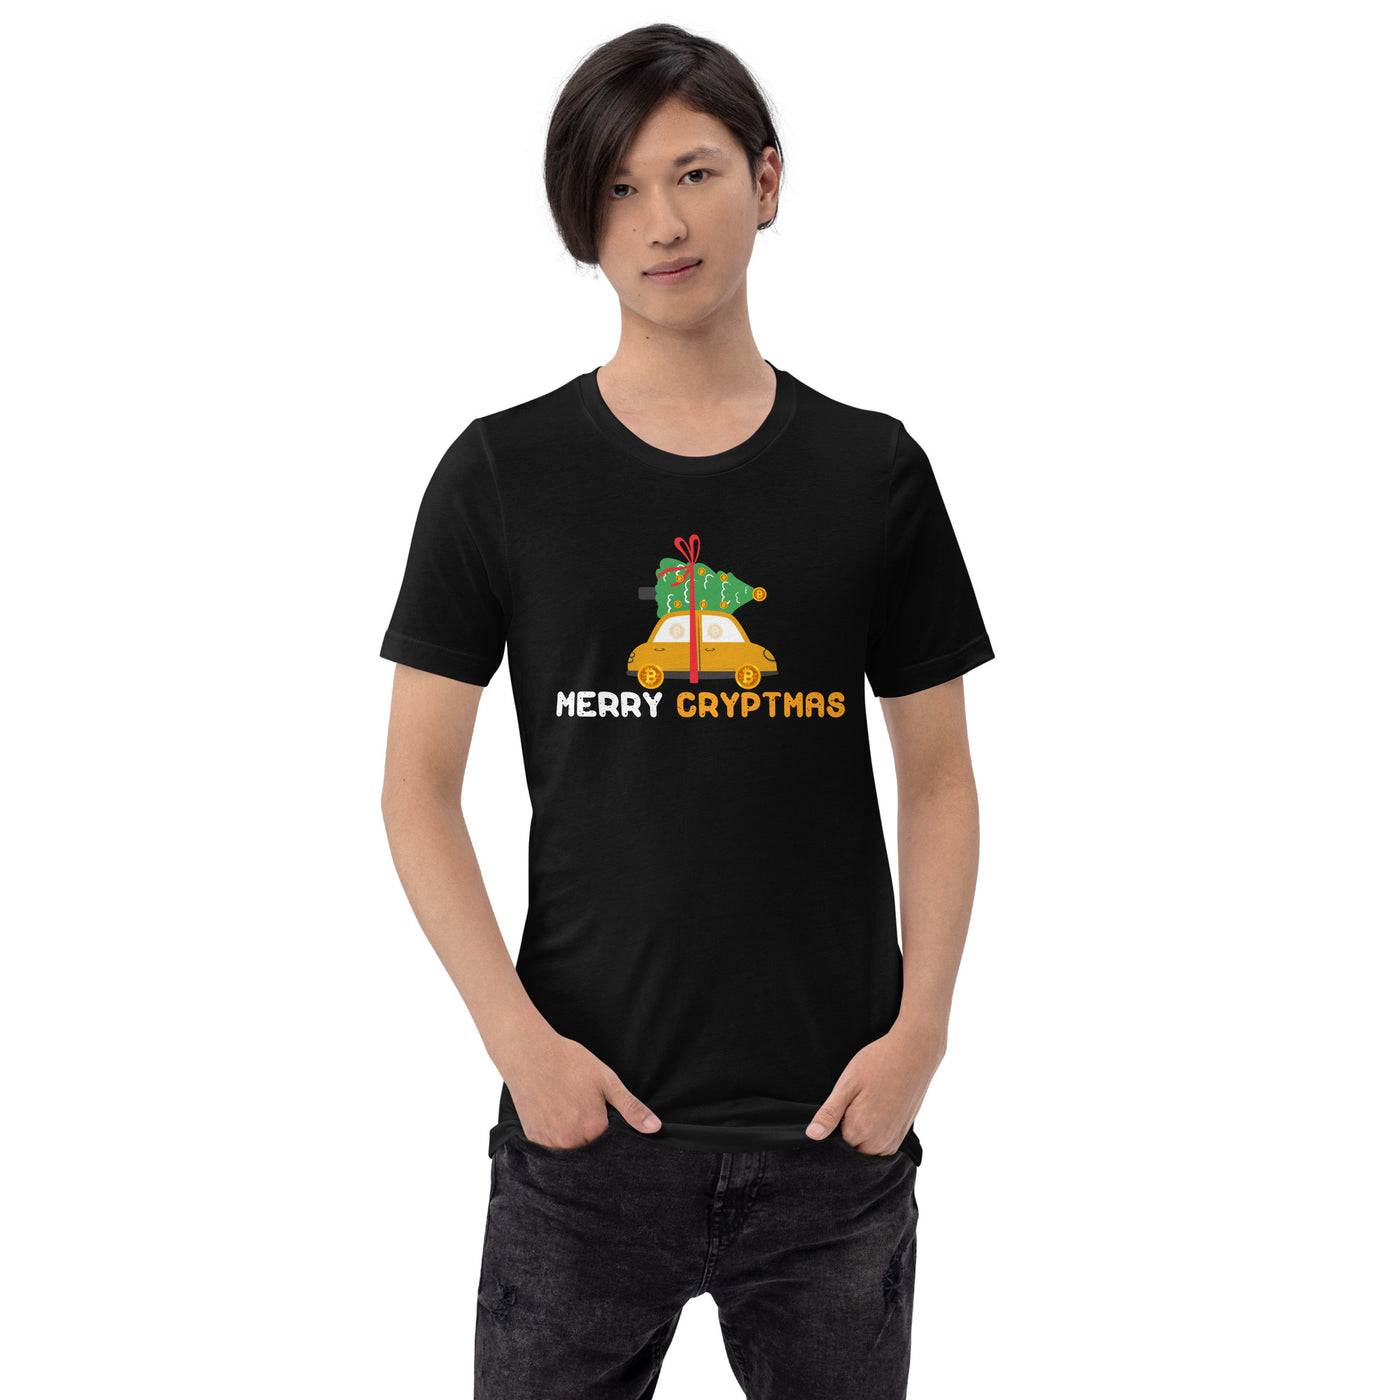 Merry Cryptmas - Unisex t-shirt